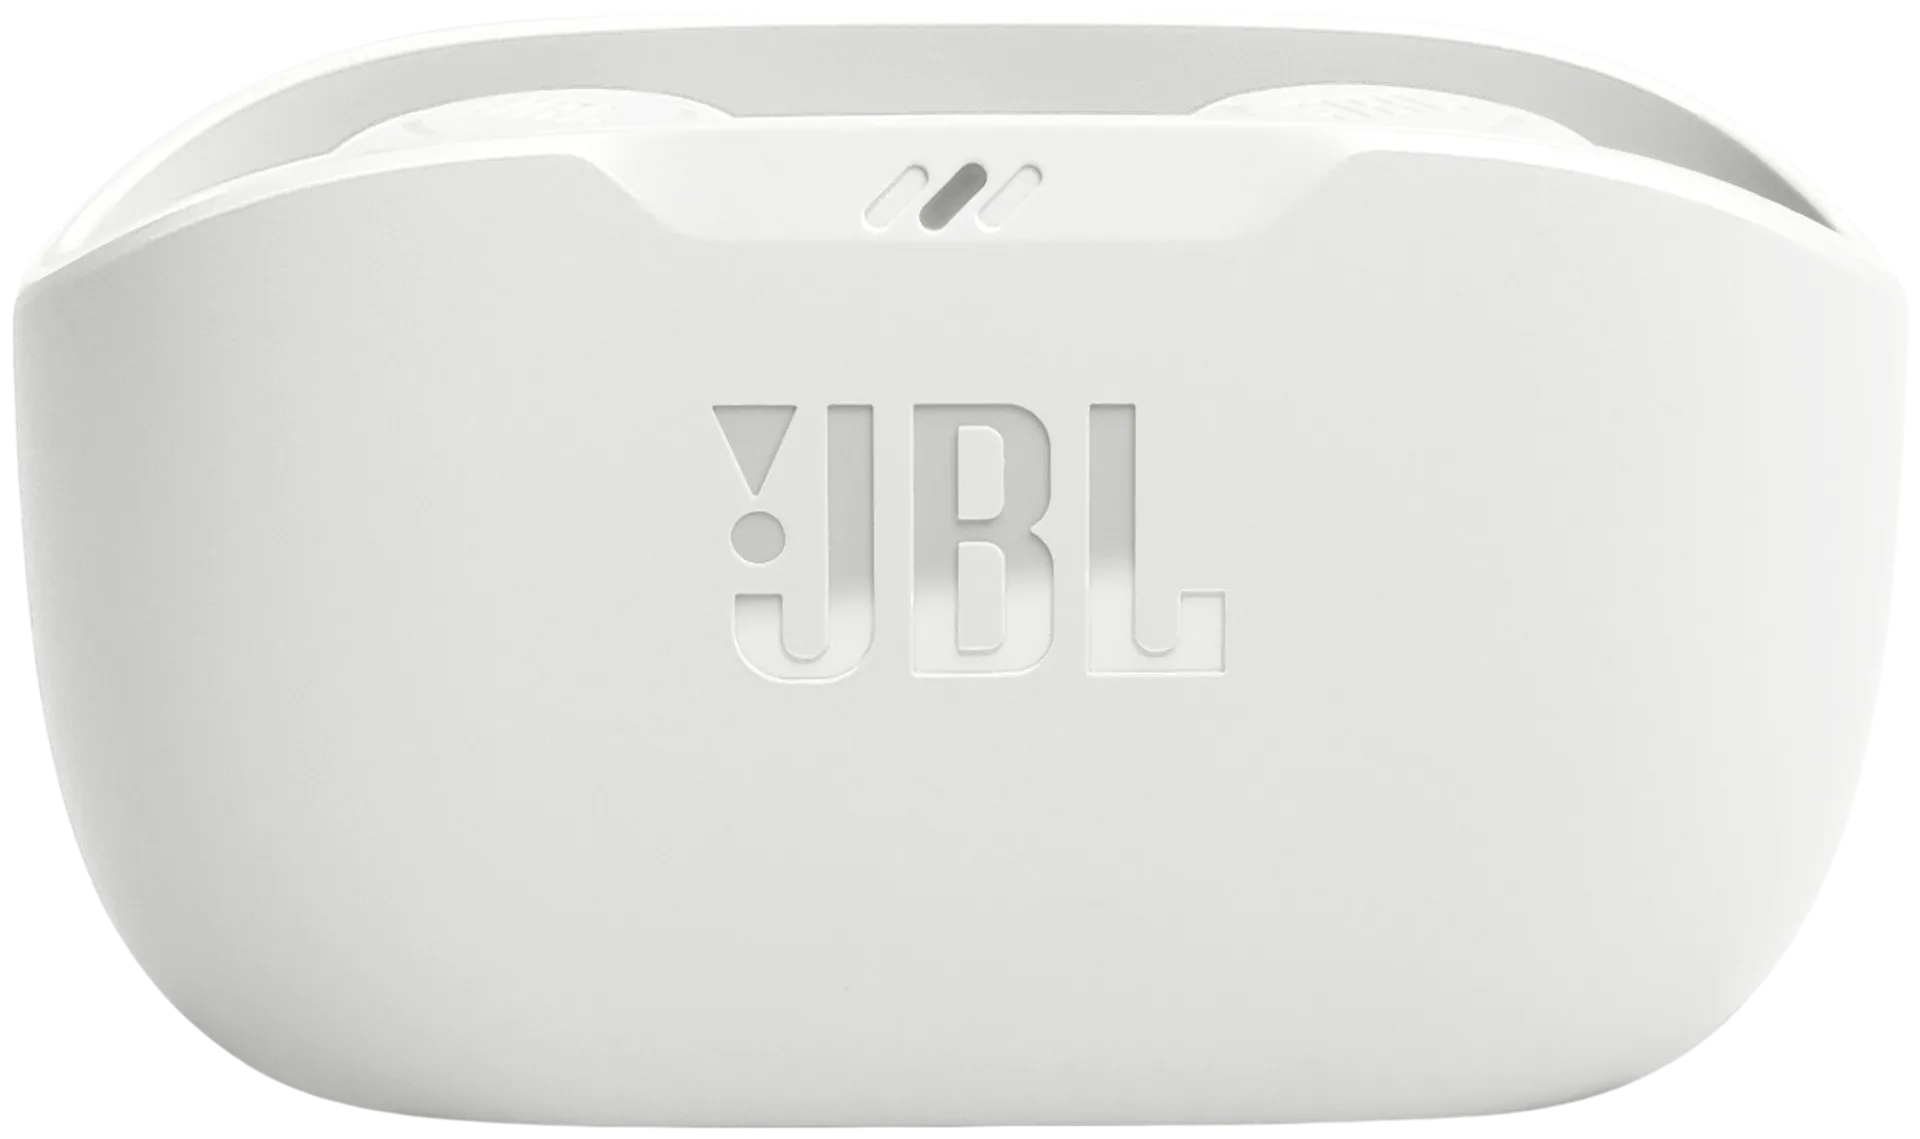 JBL Bluetooth nappikuulokkeet Vibe Buds valkoinen - 4